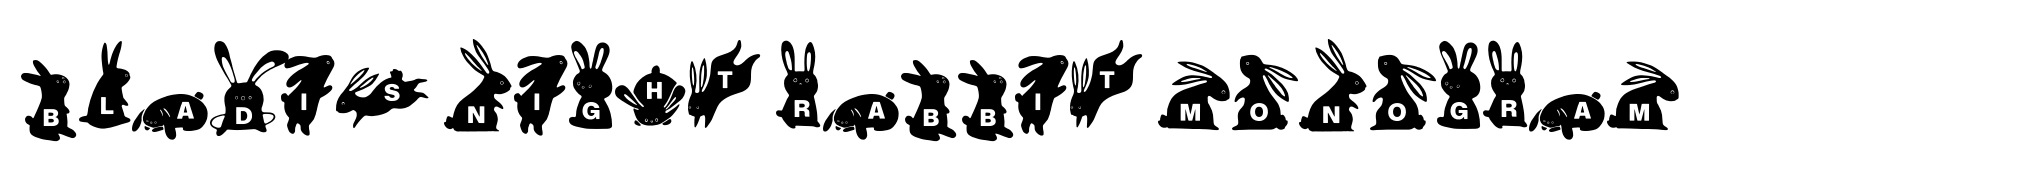 Bladis Night Rabbit Monogram image